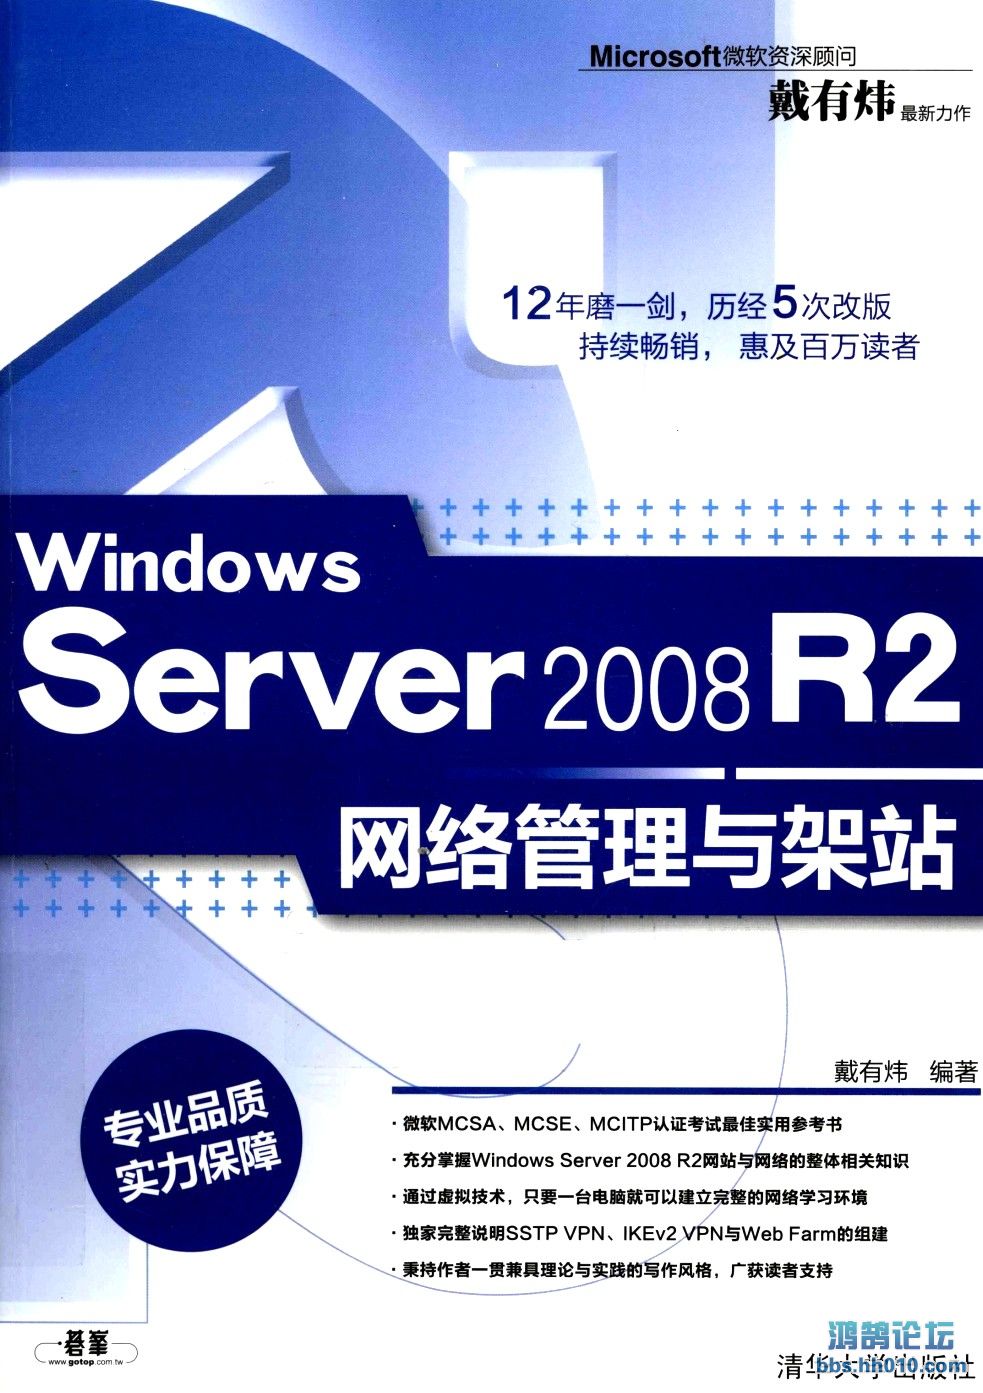 Windows.Server.2008.jpg